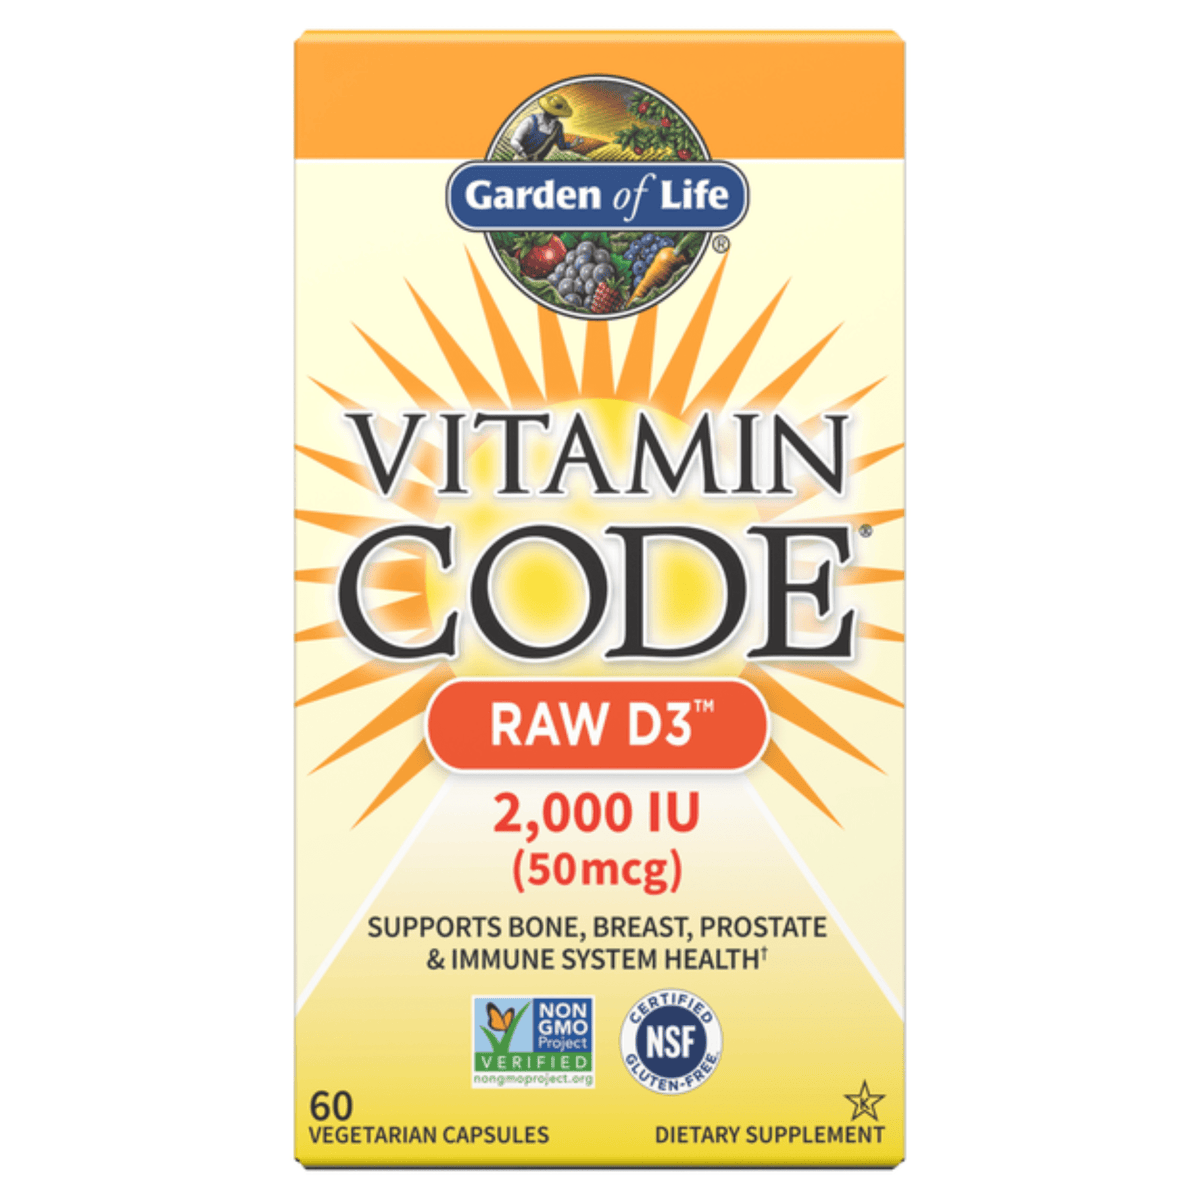 Primary Image of Vitamin Code Raw D3 2000IU